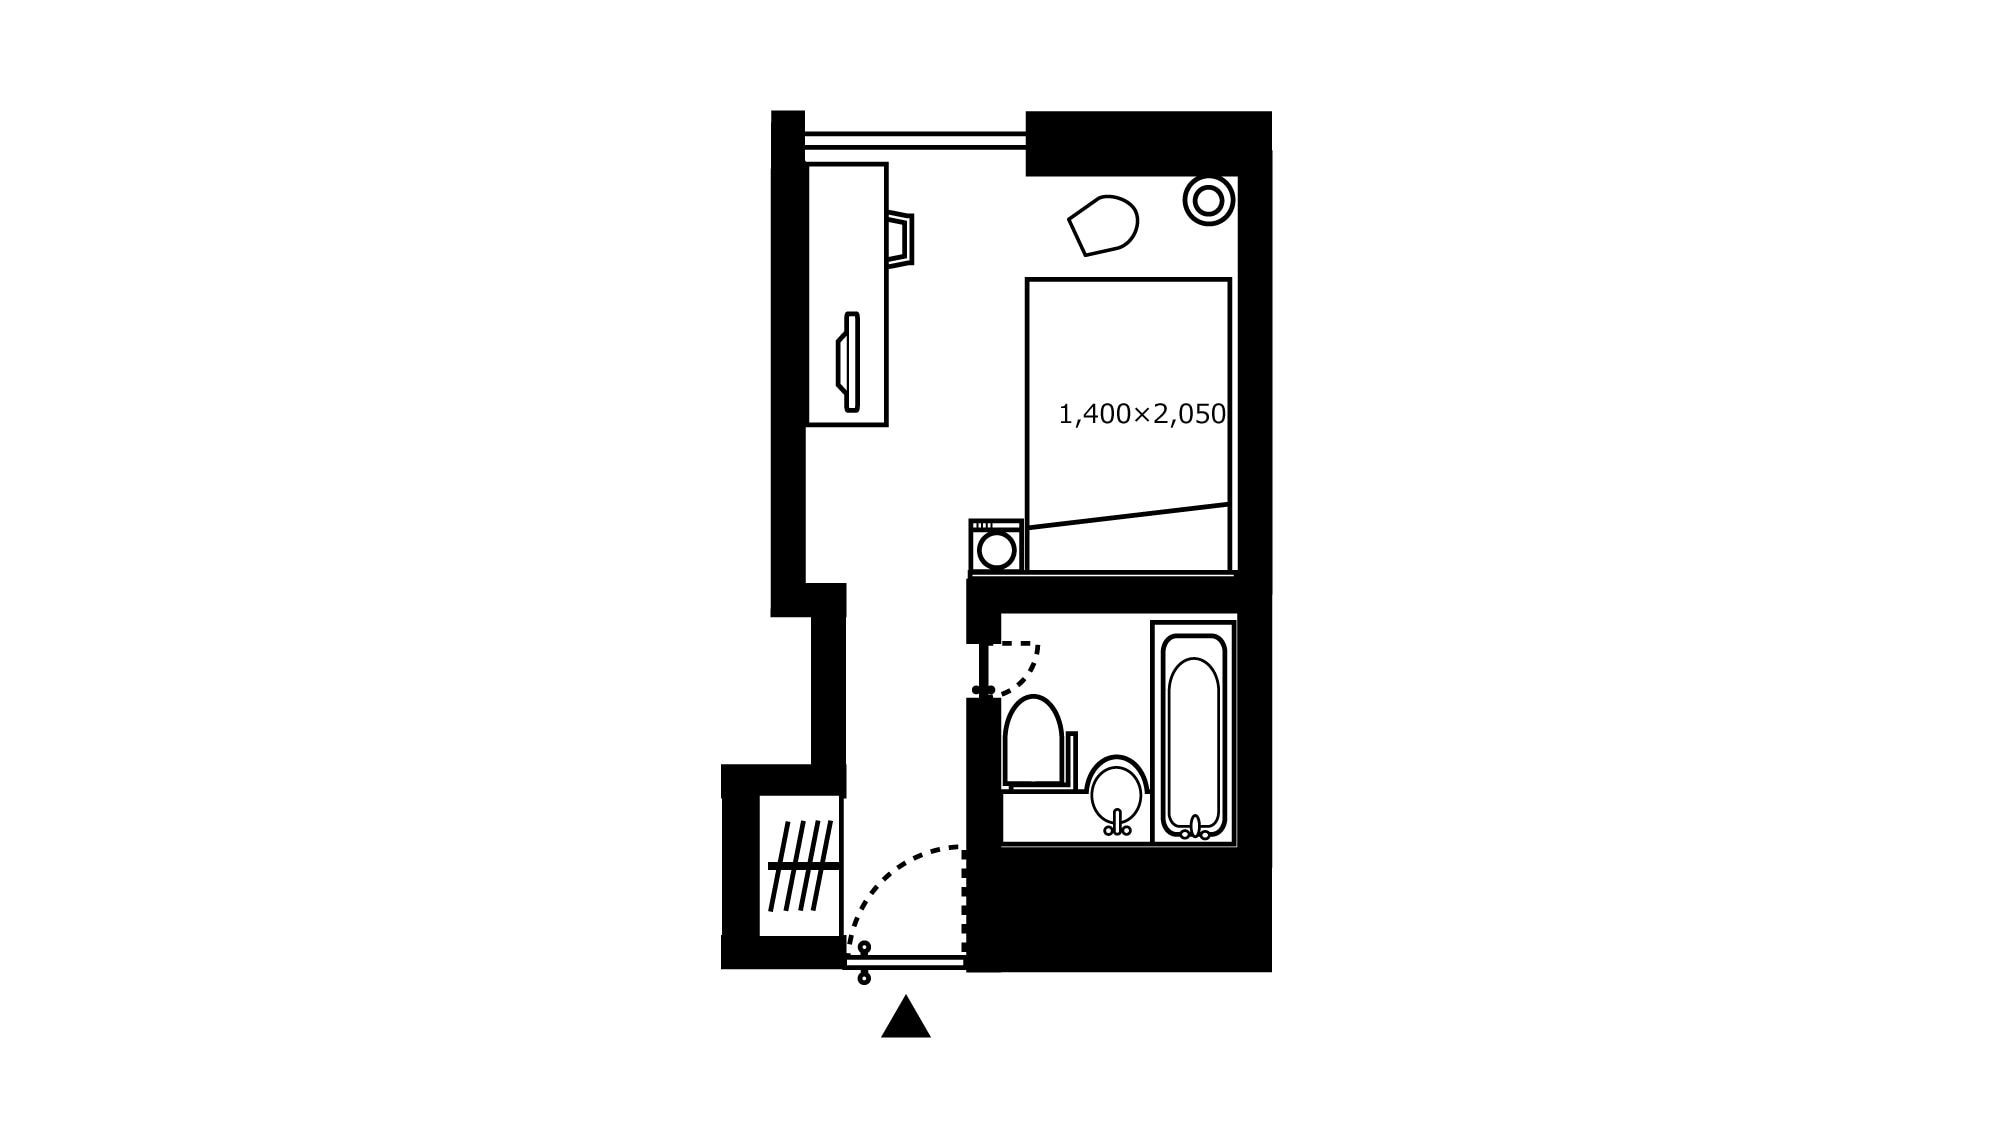 Single room 17.8㎡ Floor plan example